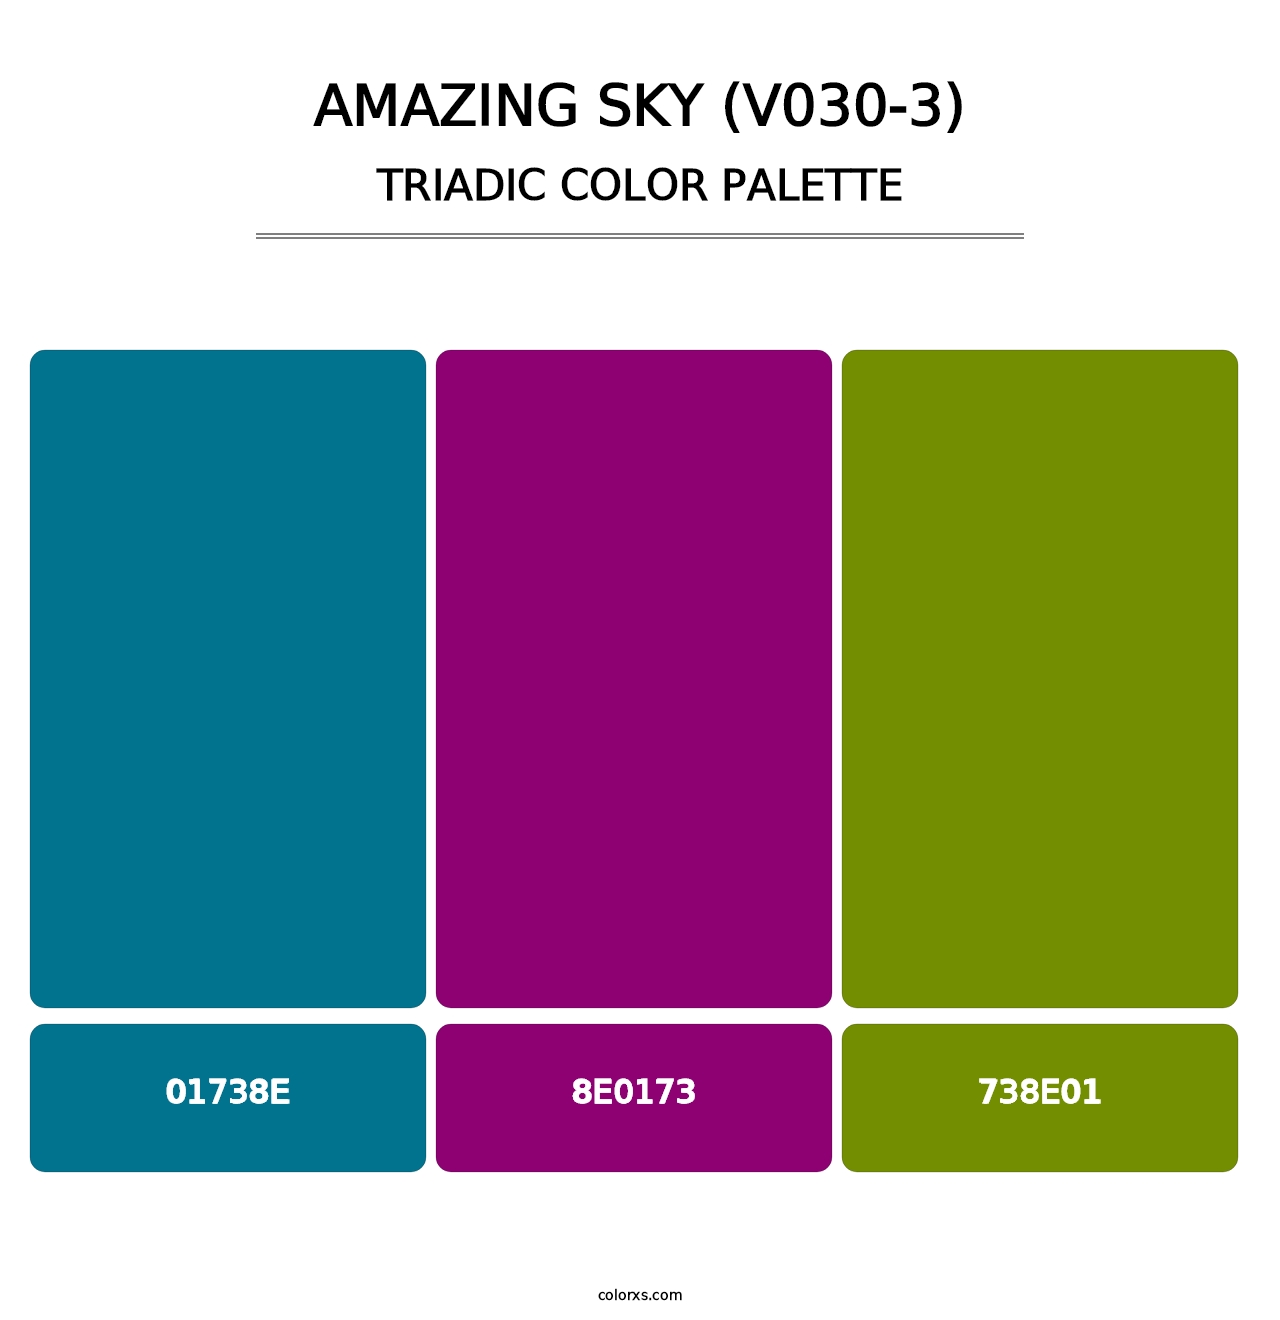 Amazing Sky (V030-3) - Triadic Color Palette